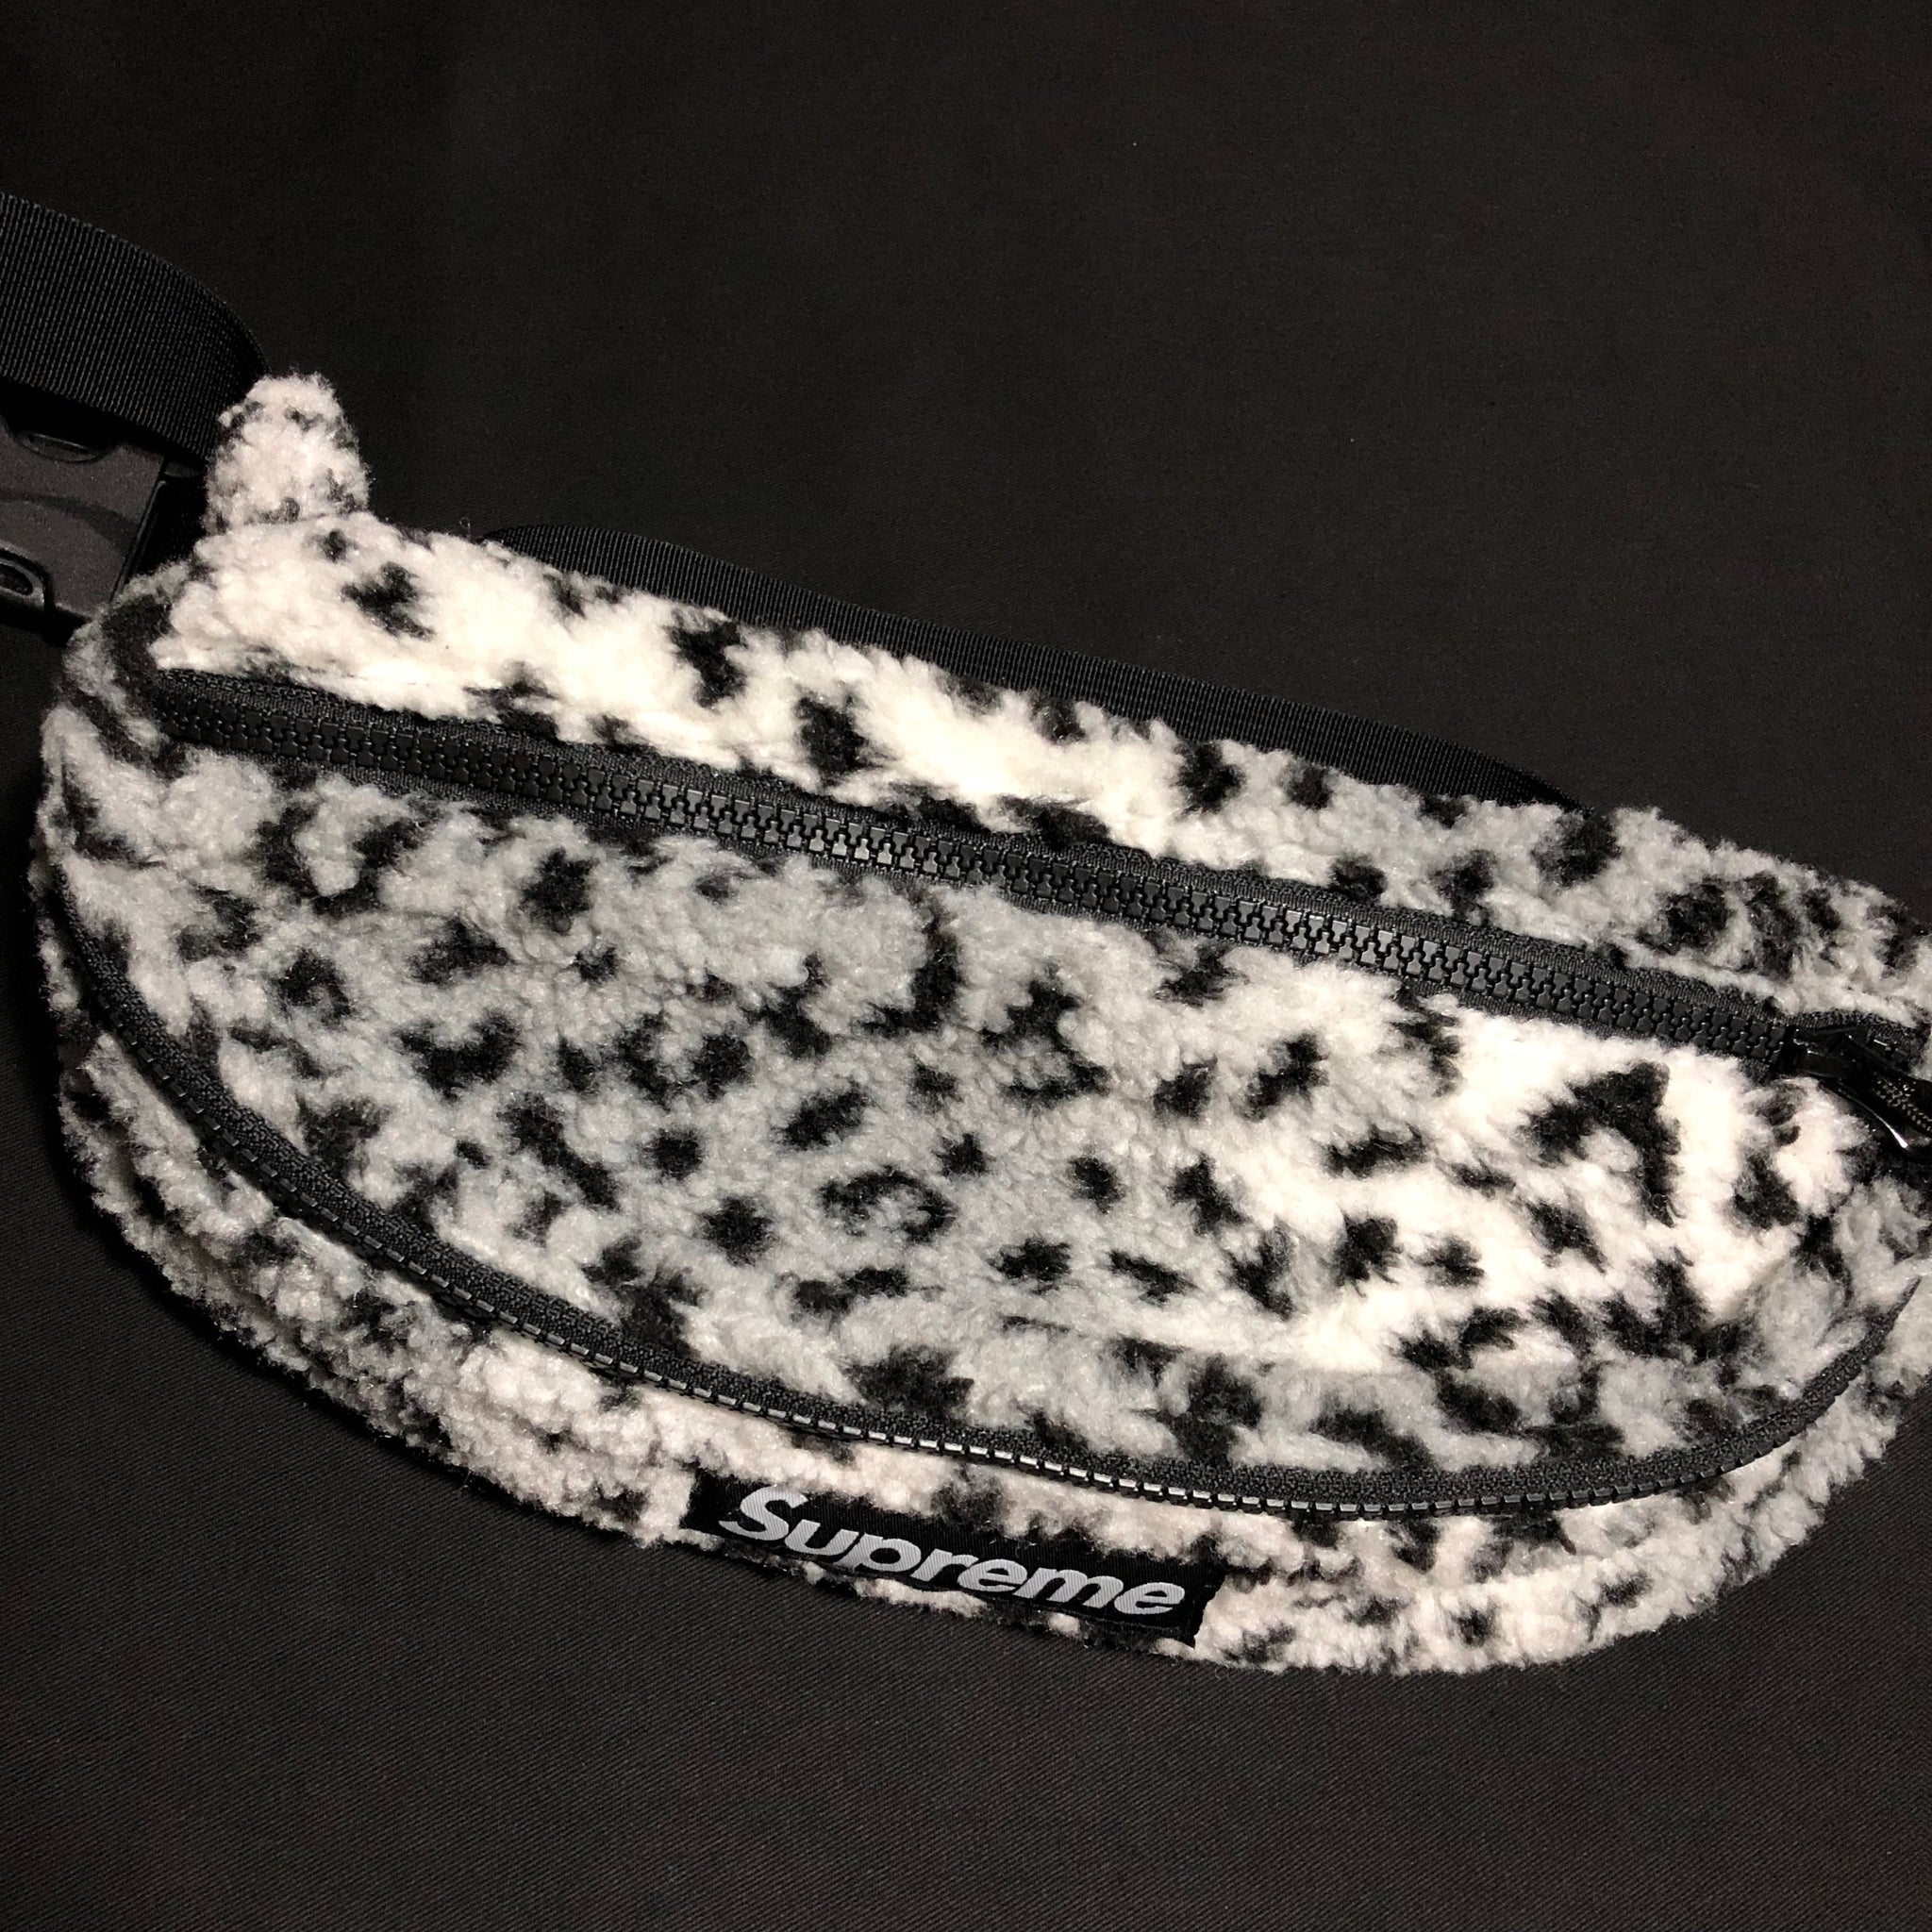 Supreme, Bags, Leopard Supreme Waist Bag Fw2